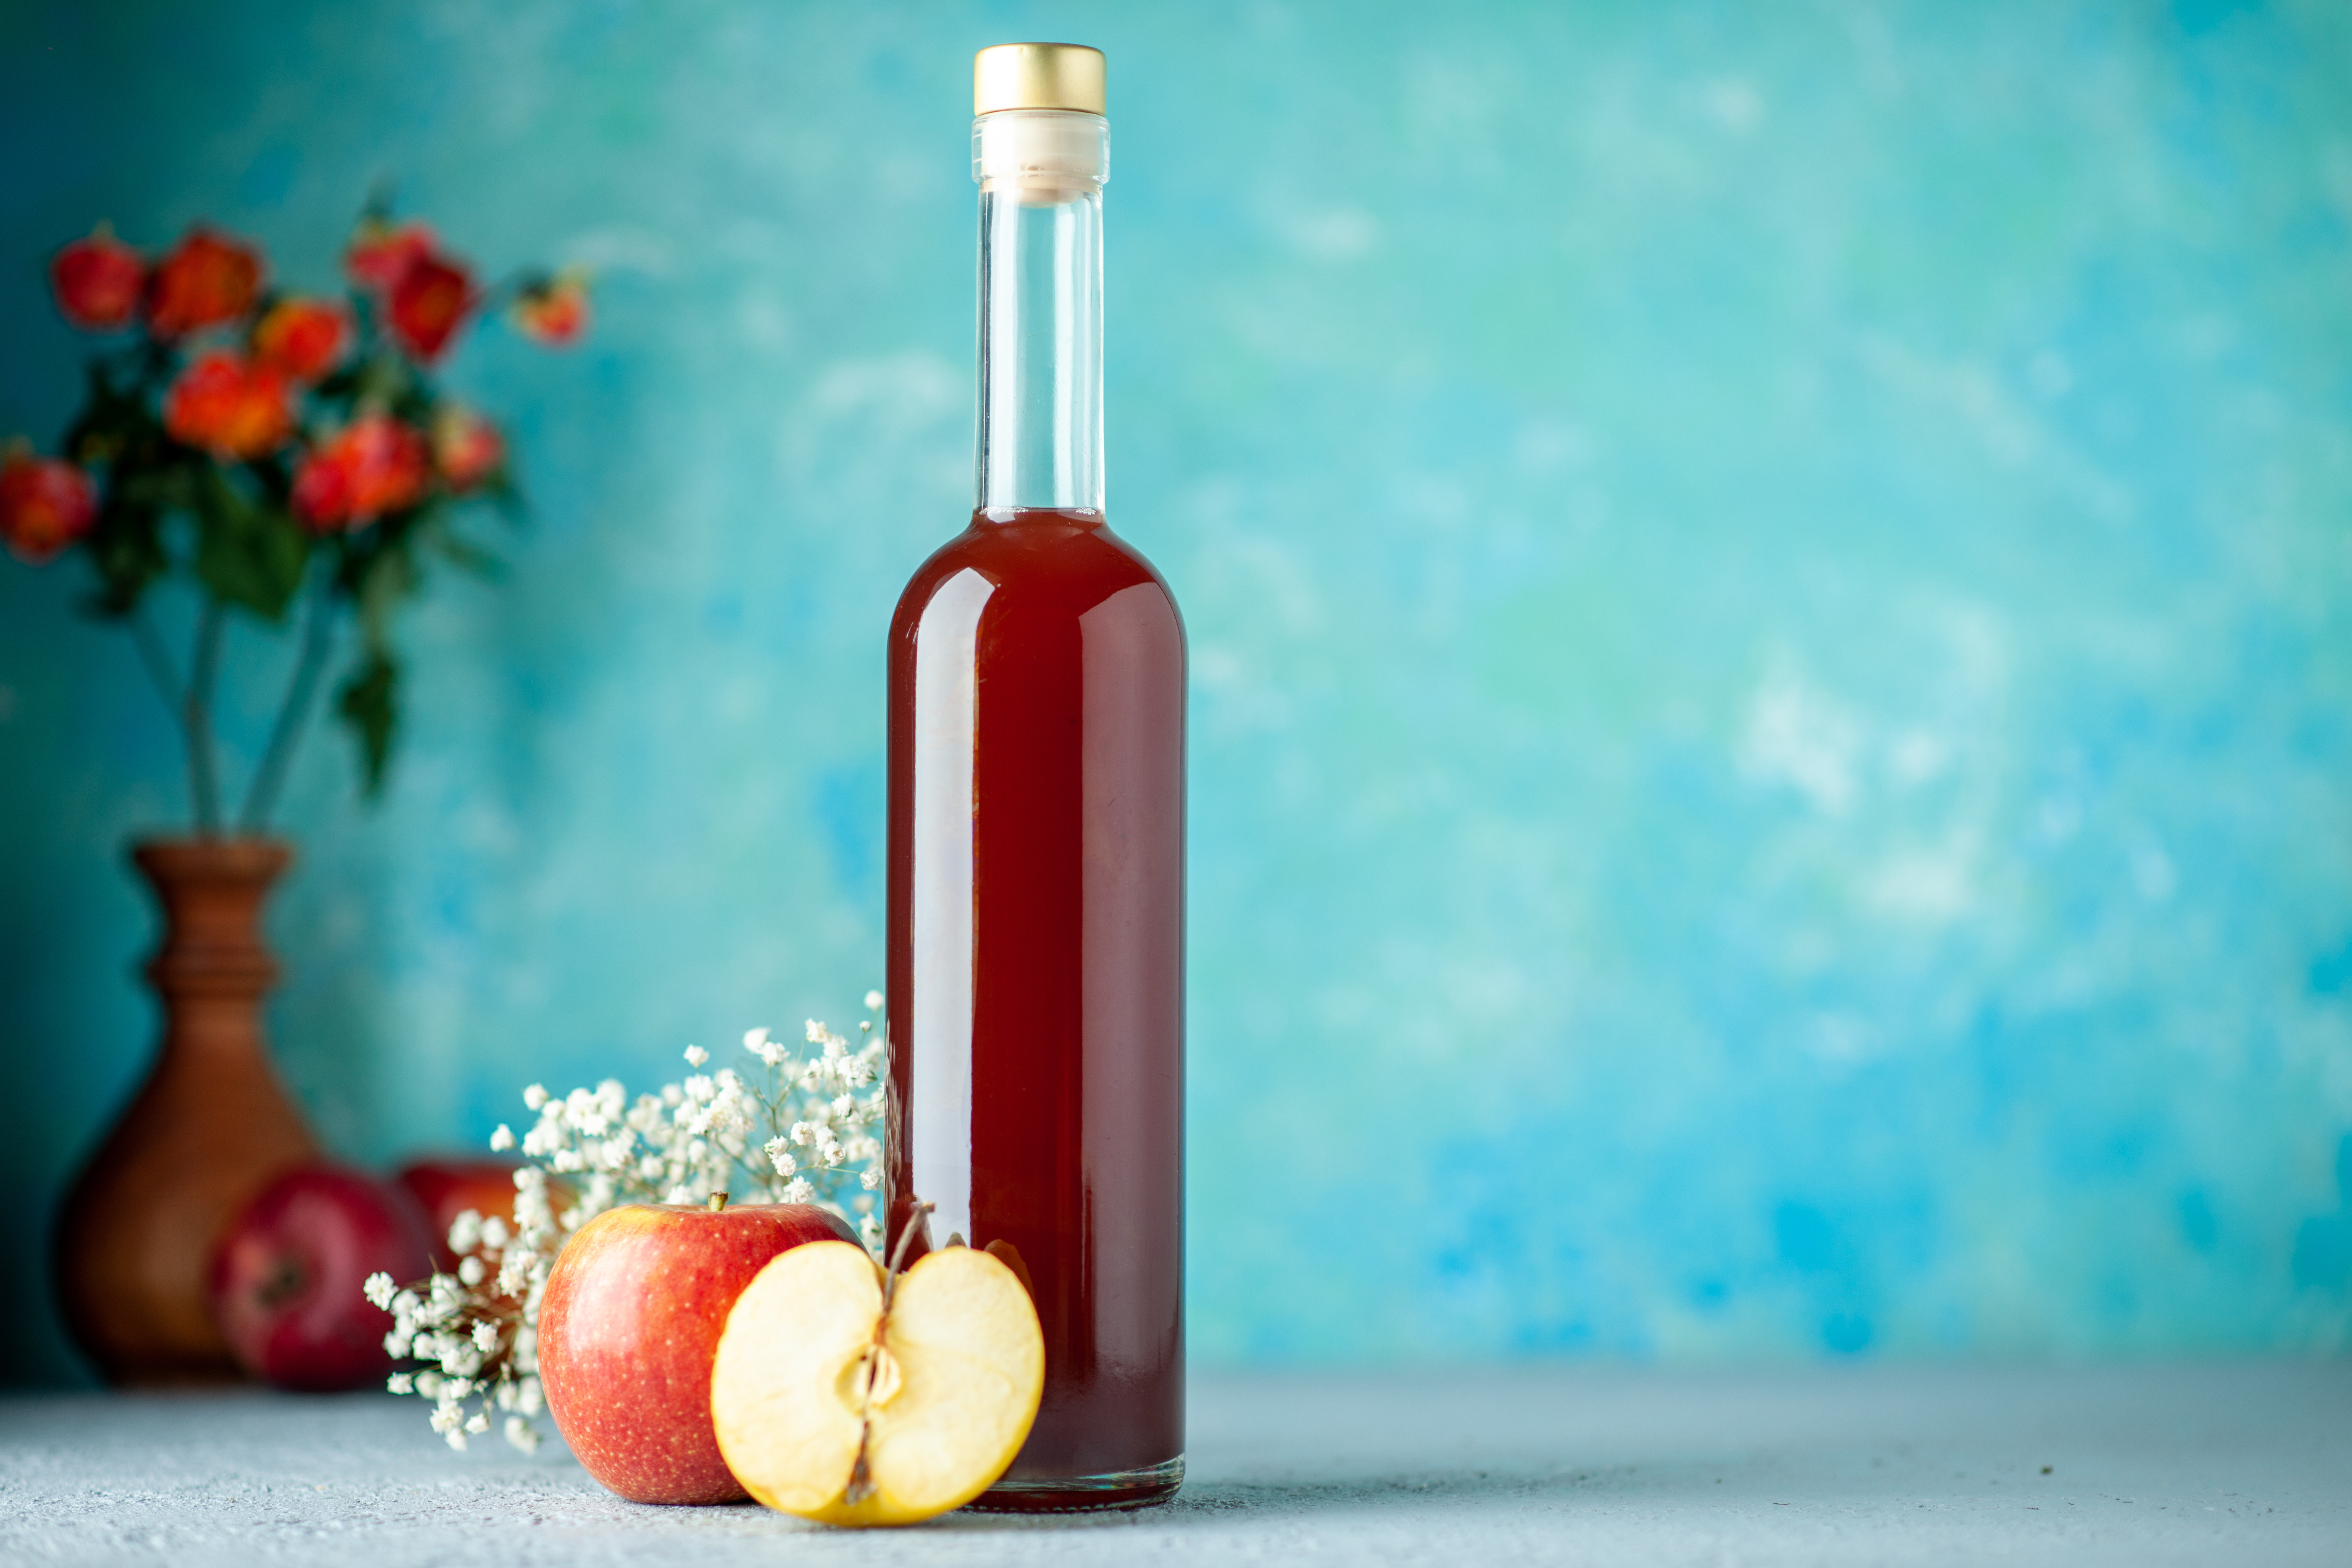 The health benefits of apple vinegar